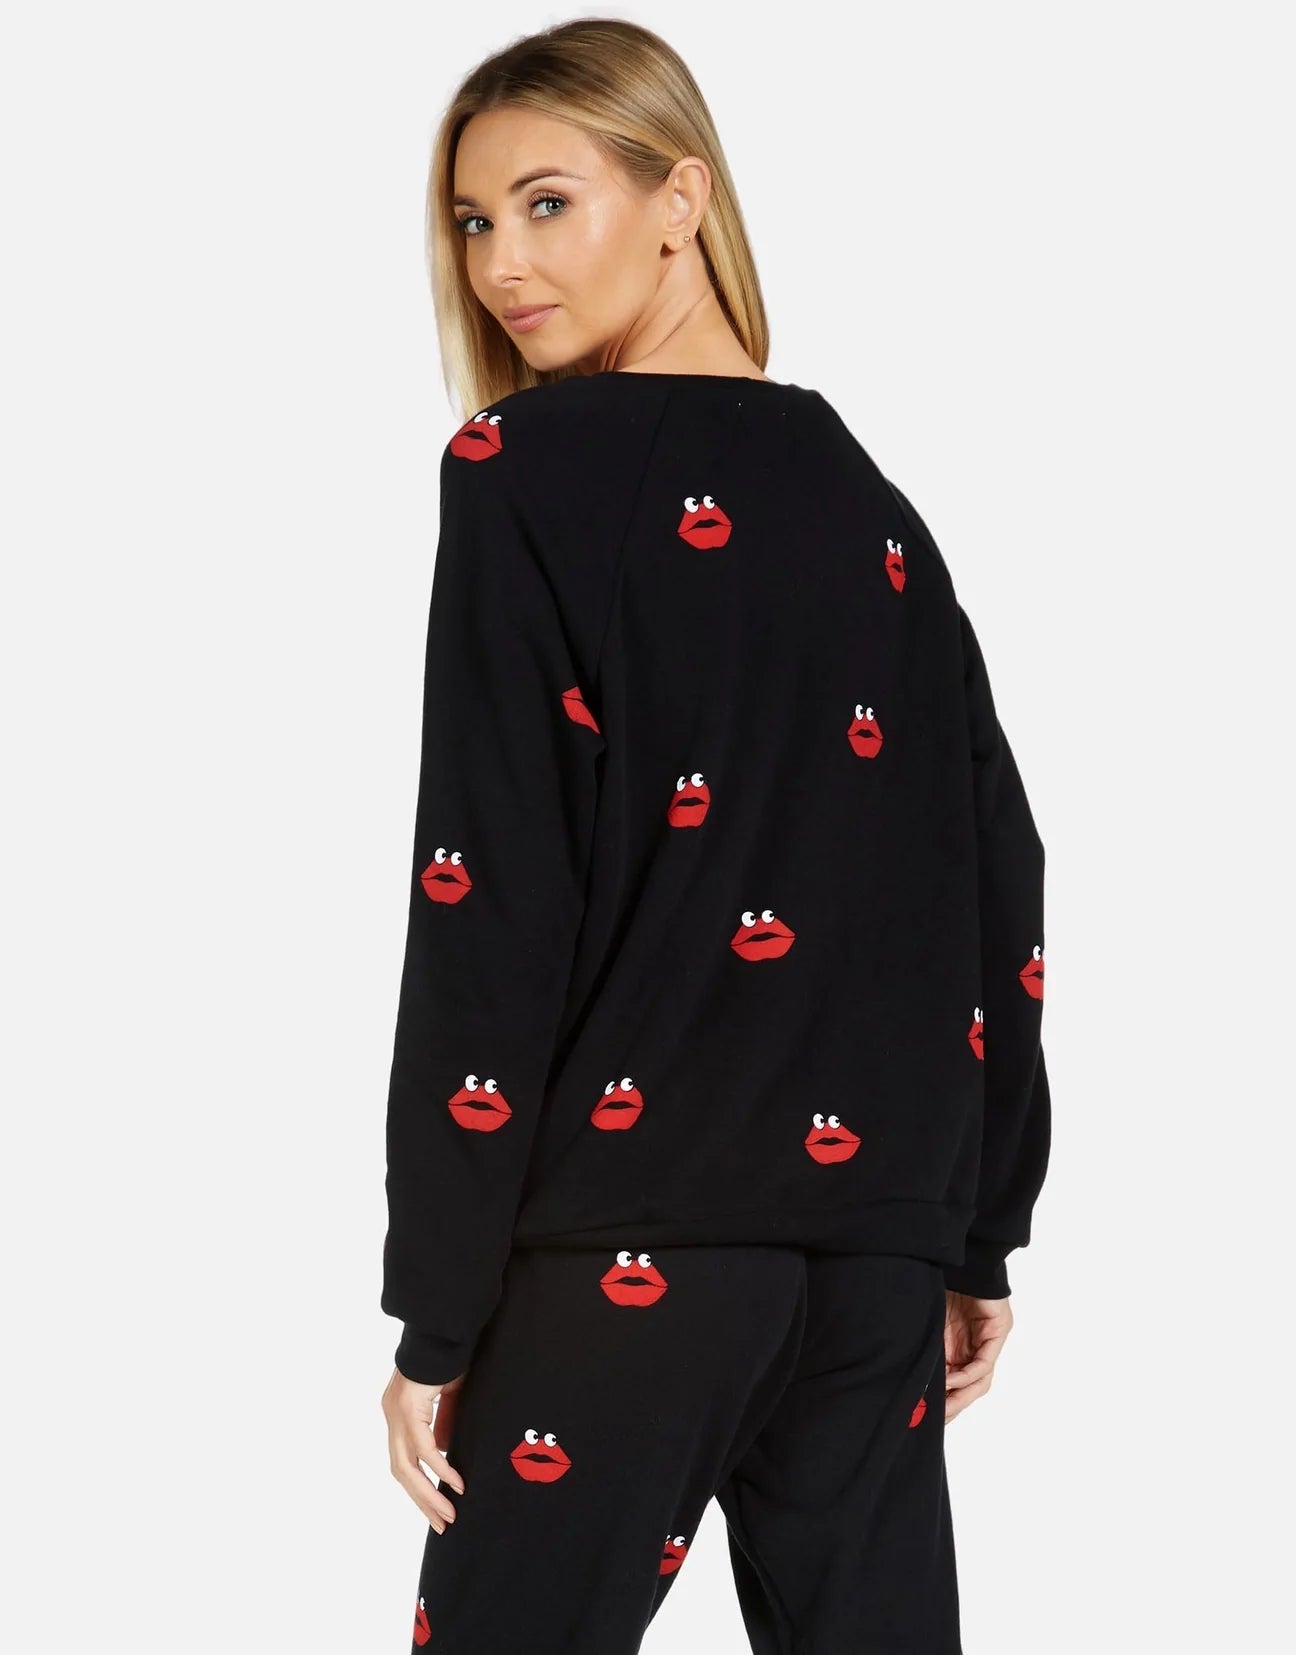 Shop Lauren Moshi Noleta Kiss Face Sweater - Premium Pullover from Lauren Moshi Online now at Spoiled Brat 